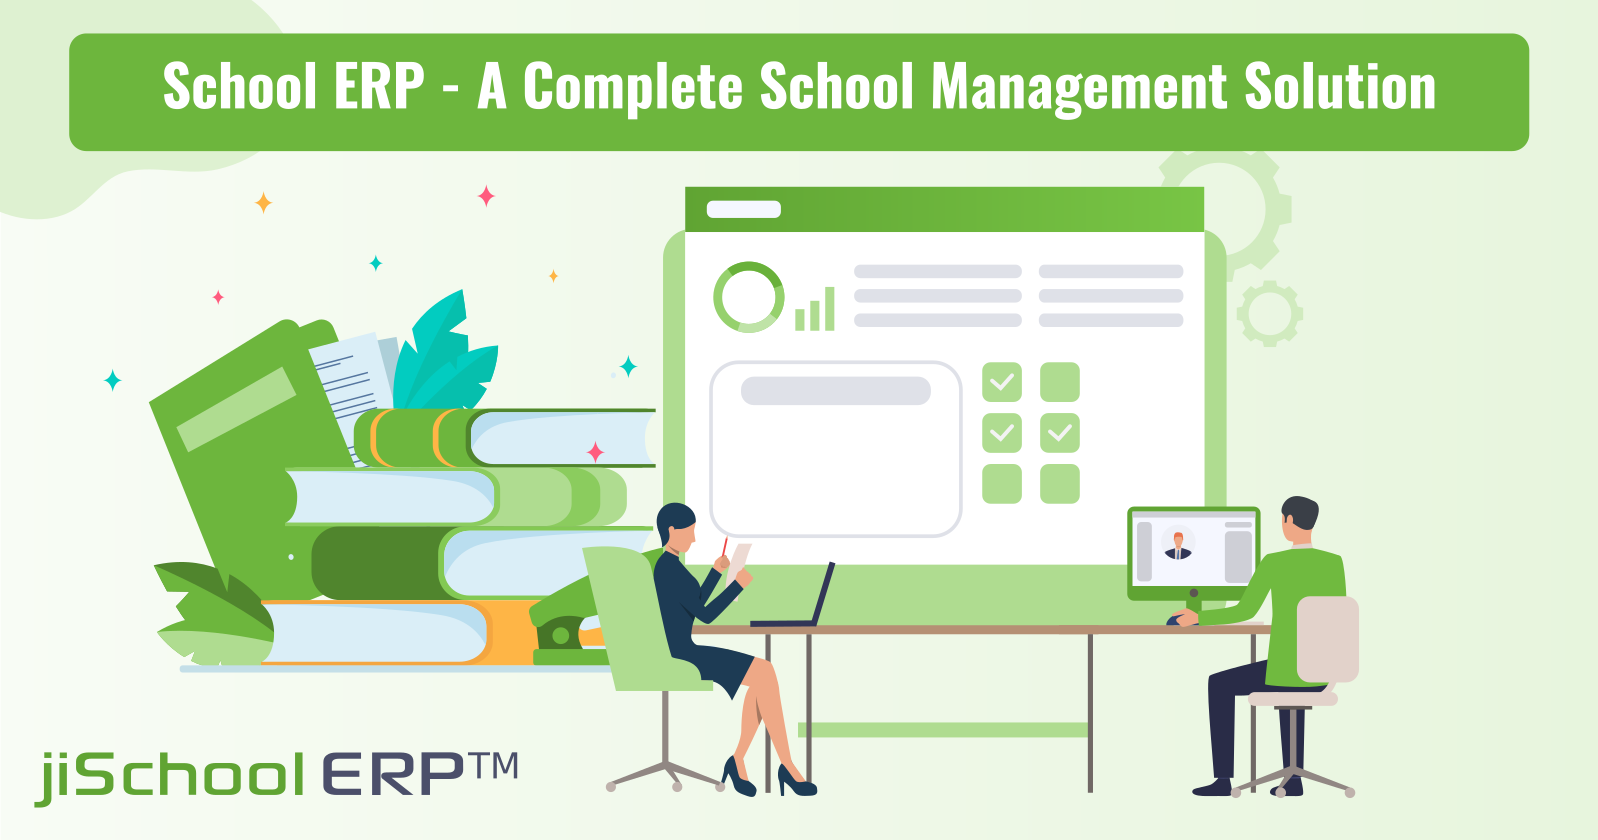 School ERP - A Complete School Management Solution